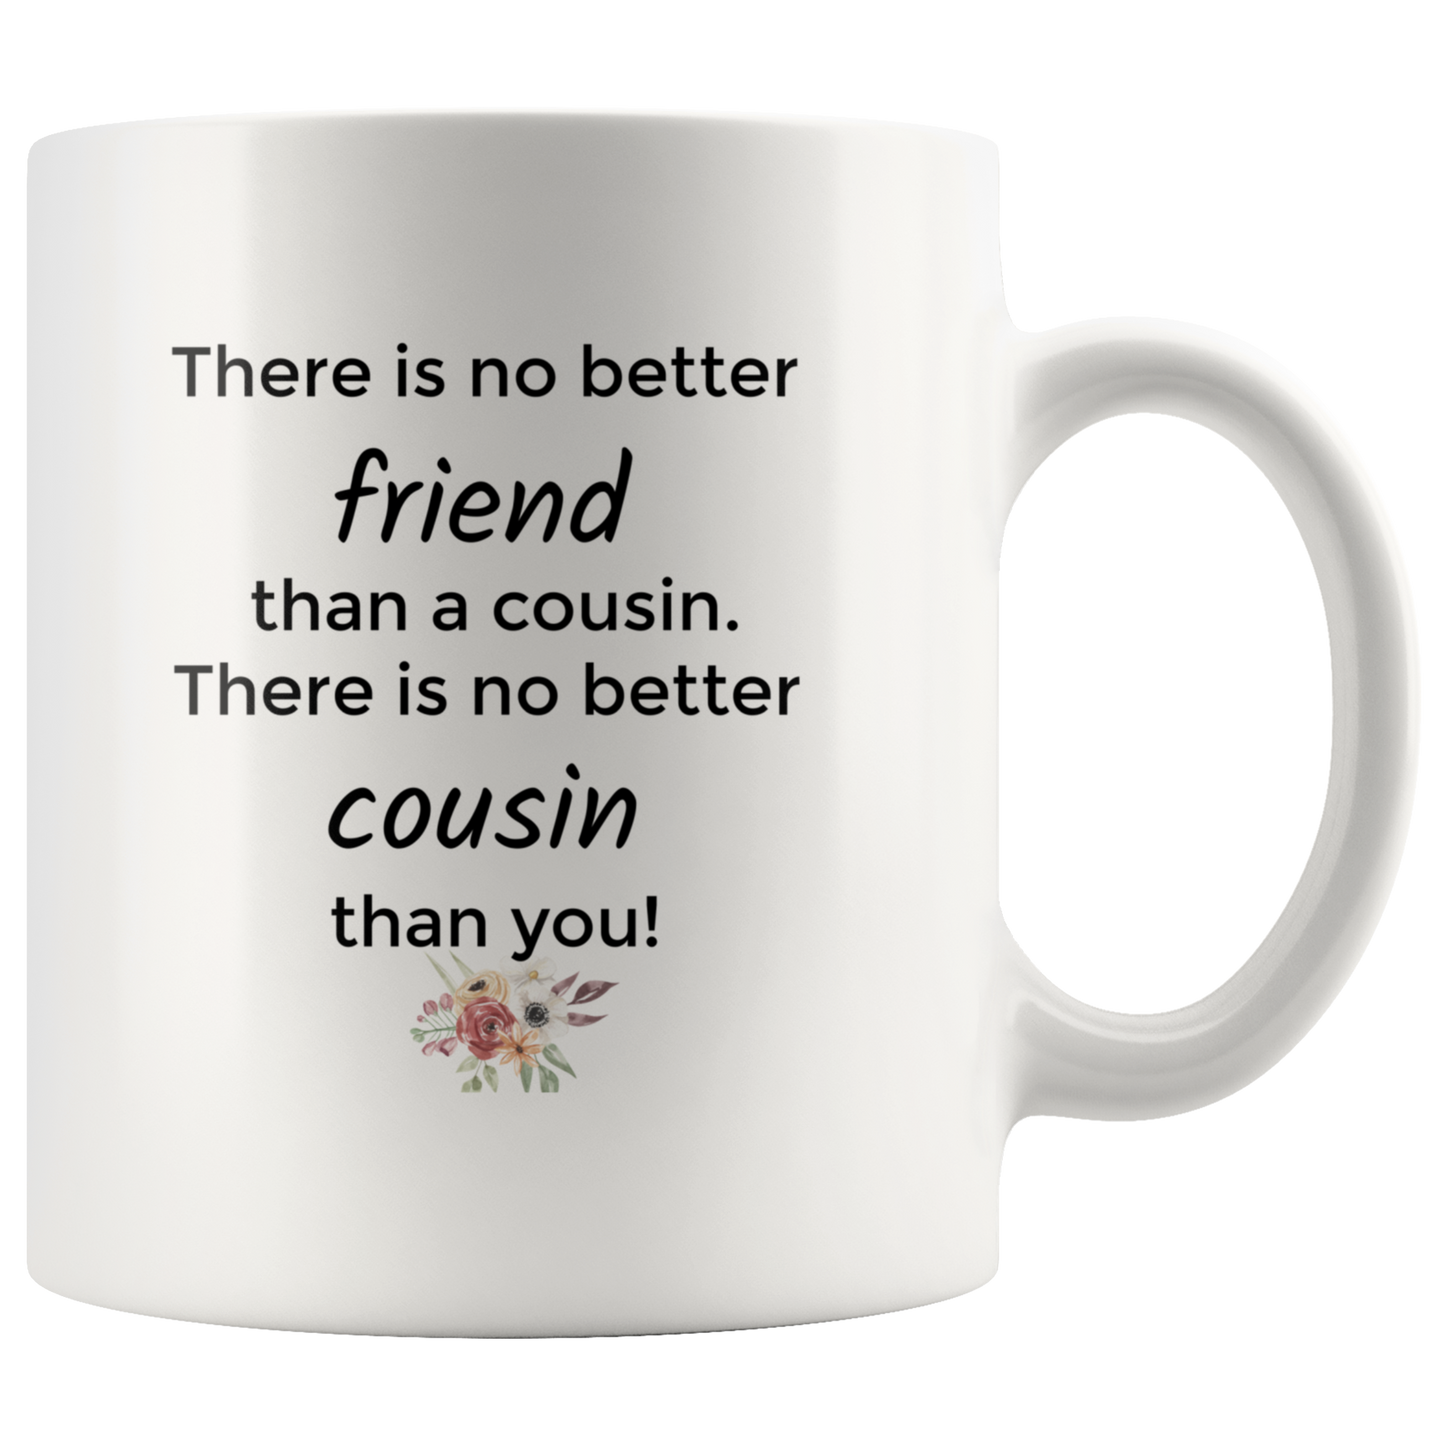 Best Friend Mug, Cousin Mug, Cousin Gift, Best Friend Gift, Friend Gift, Custom Mug